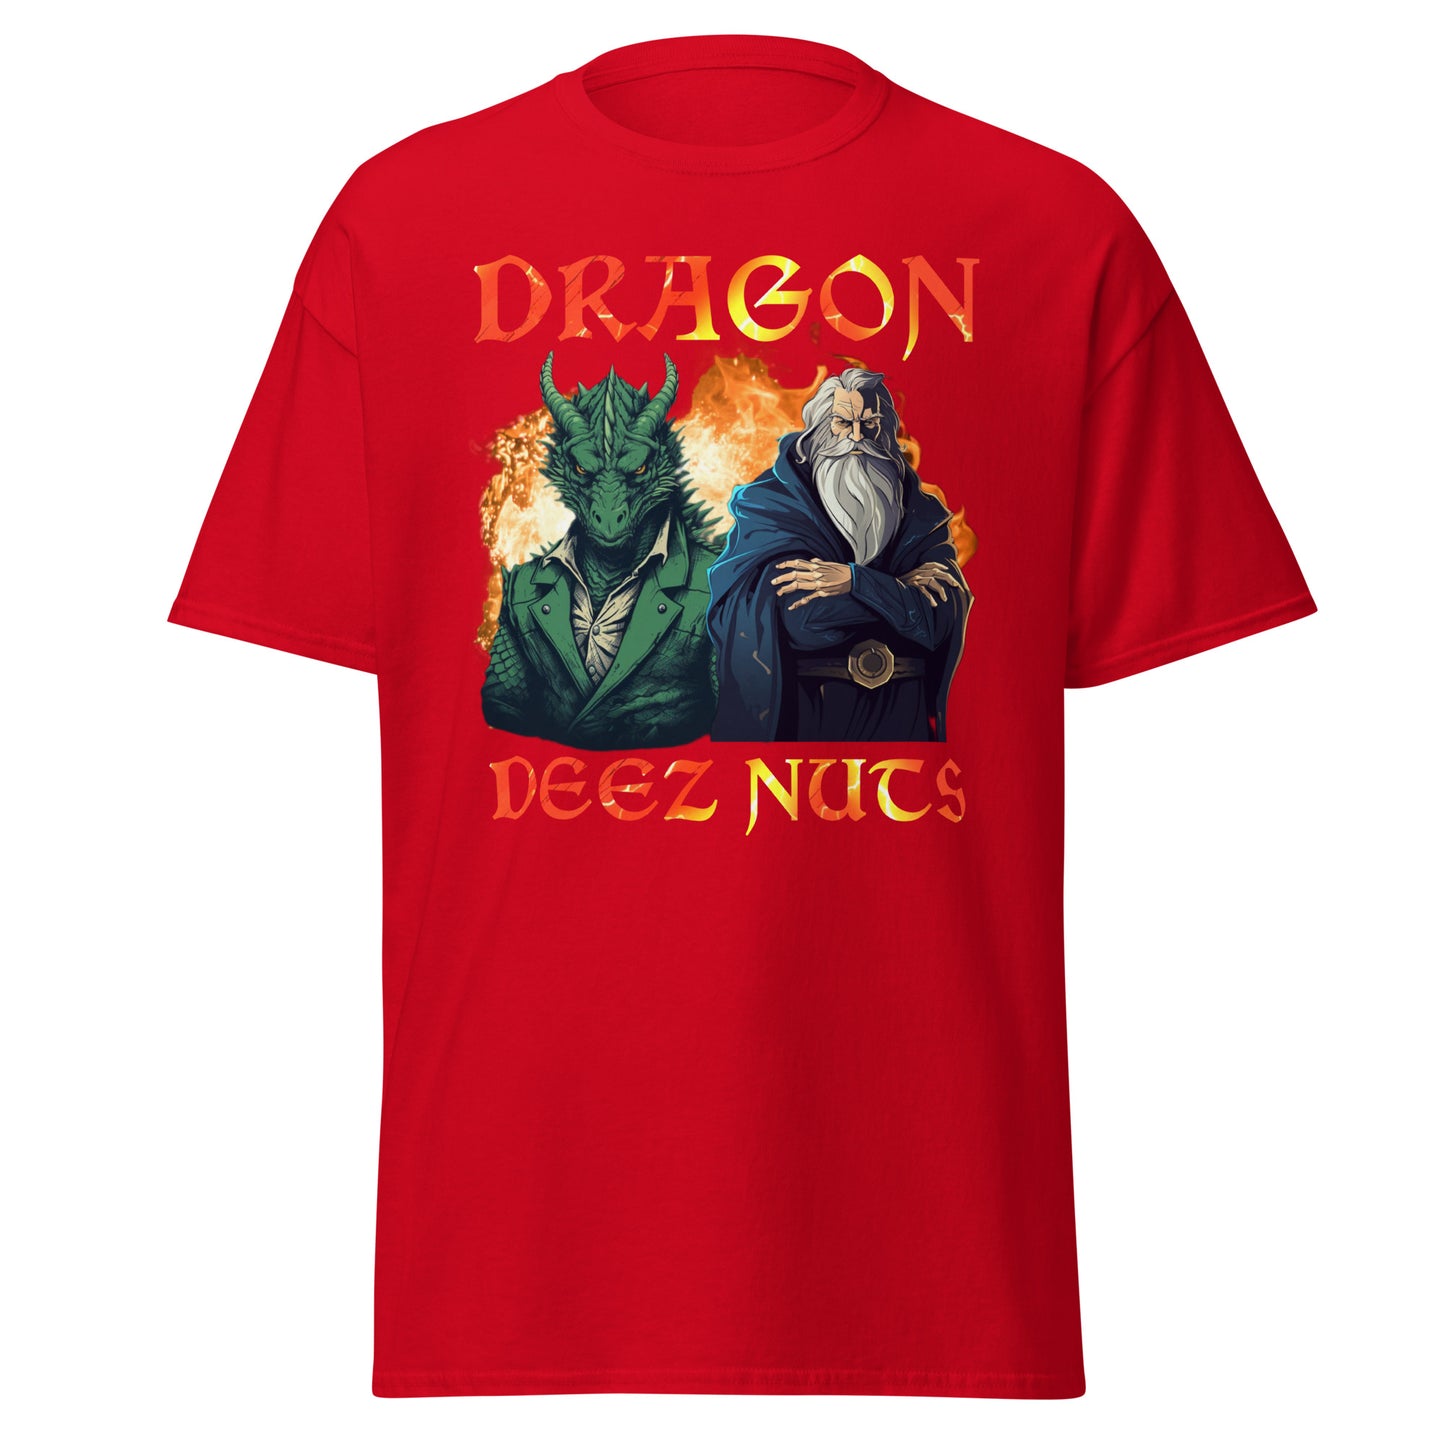 Dragon deez nuts